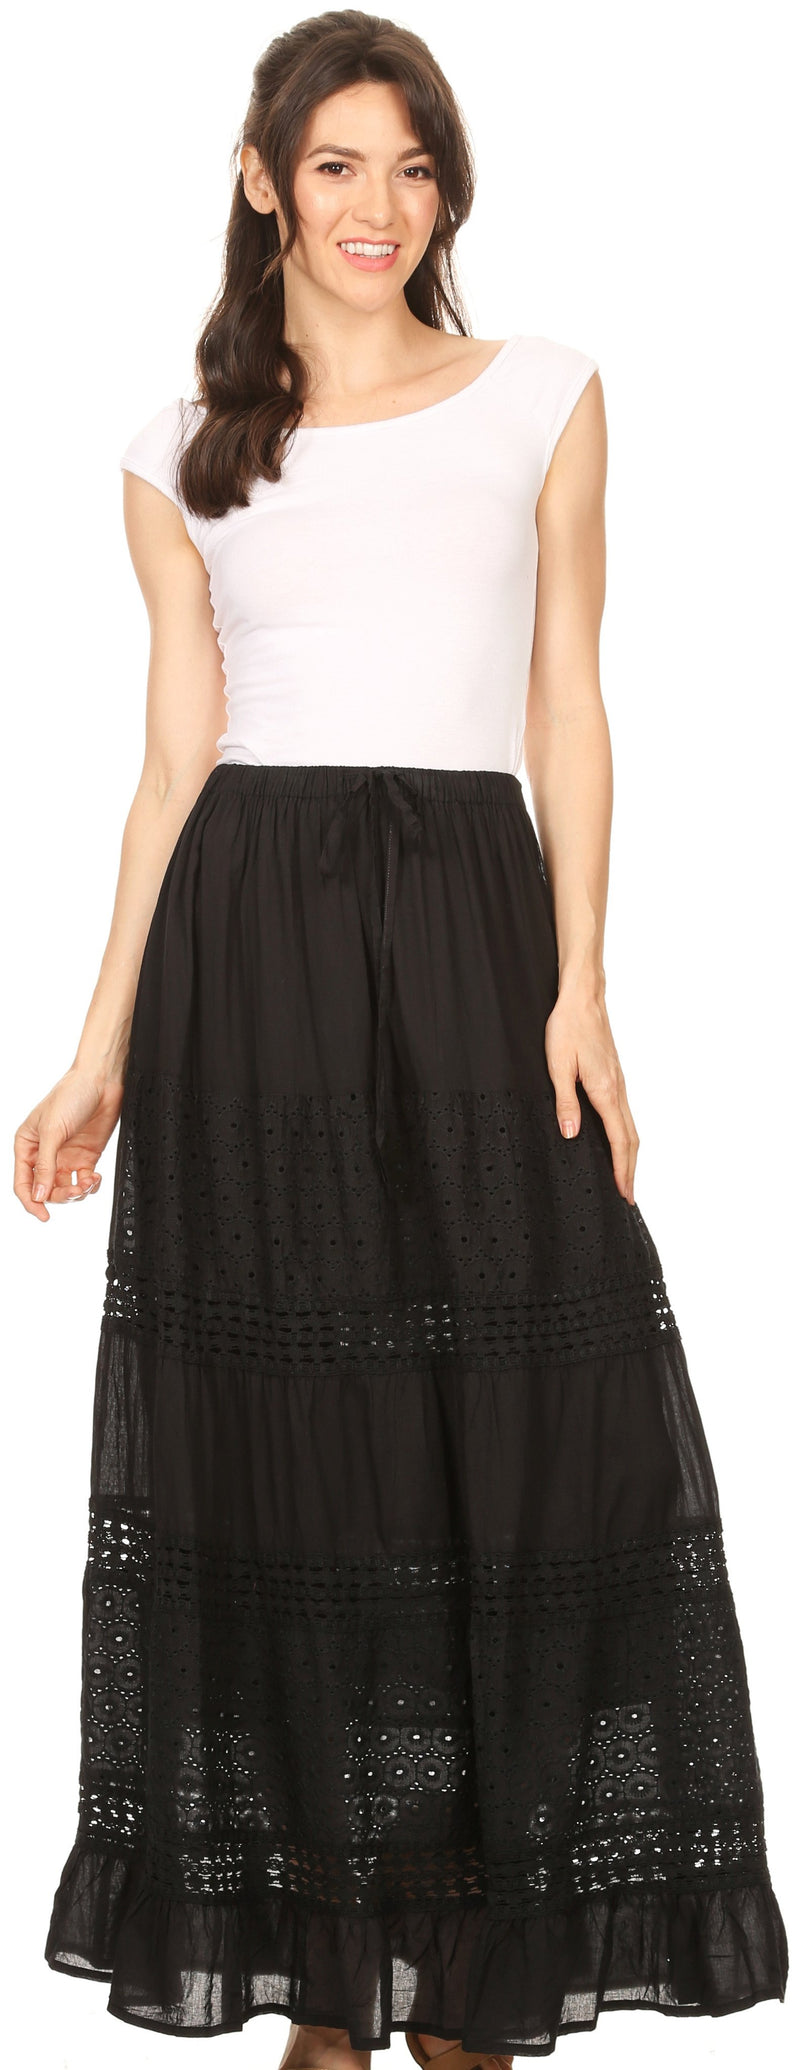 Sakkas Genesis Lightweight Cotton Eyelet Skirt with Elastic Waistband